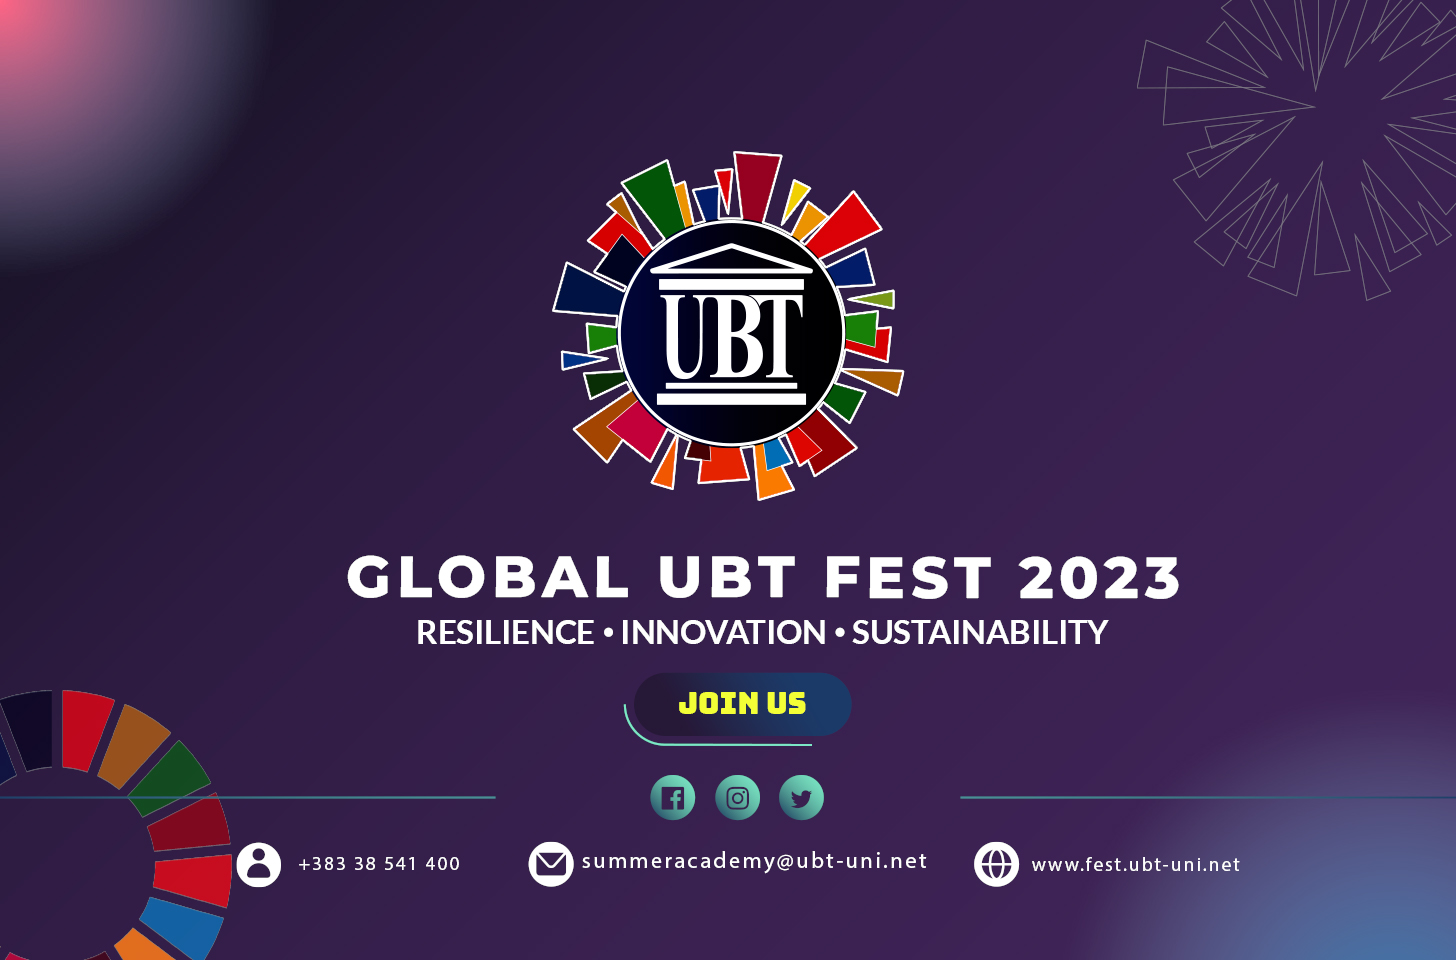 Registrations for the International Knowledge Festival “Global UBT Fest 2023” have officially started